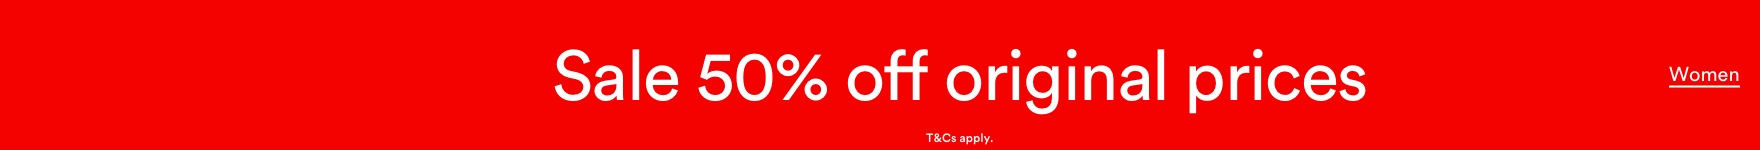 Sale 50-70% off original prices. T&Cs apply. Click to Shop Women.